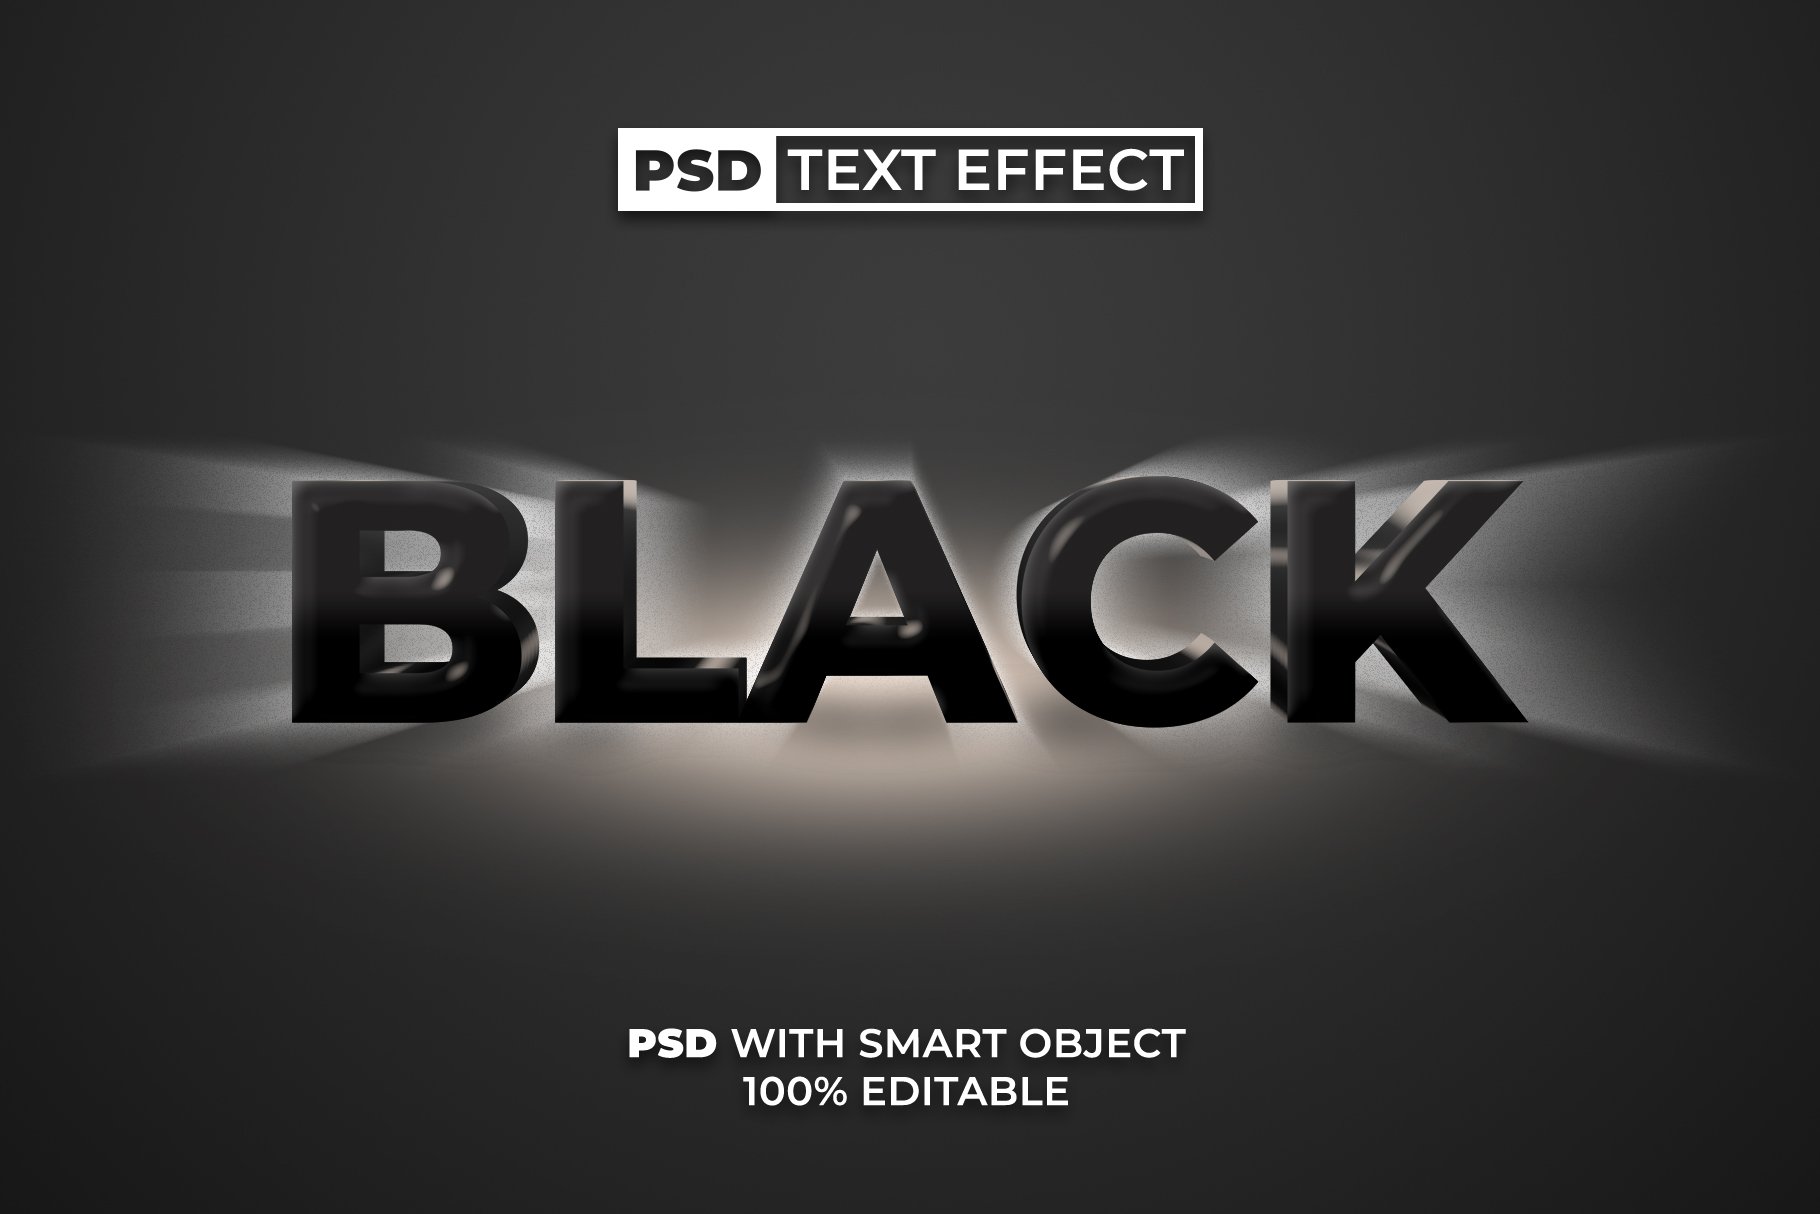 PSD Black Text Effect Back Lightcover image.